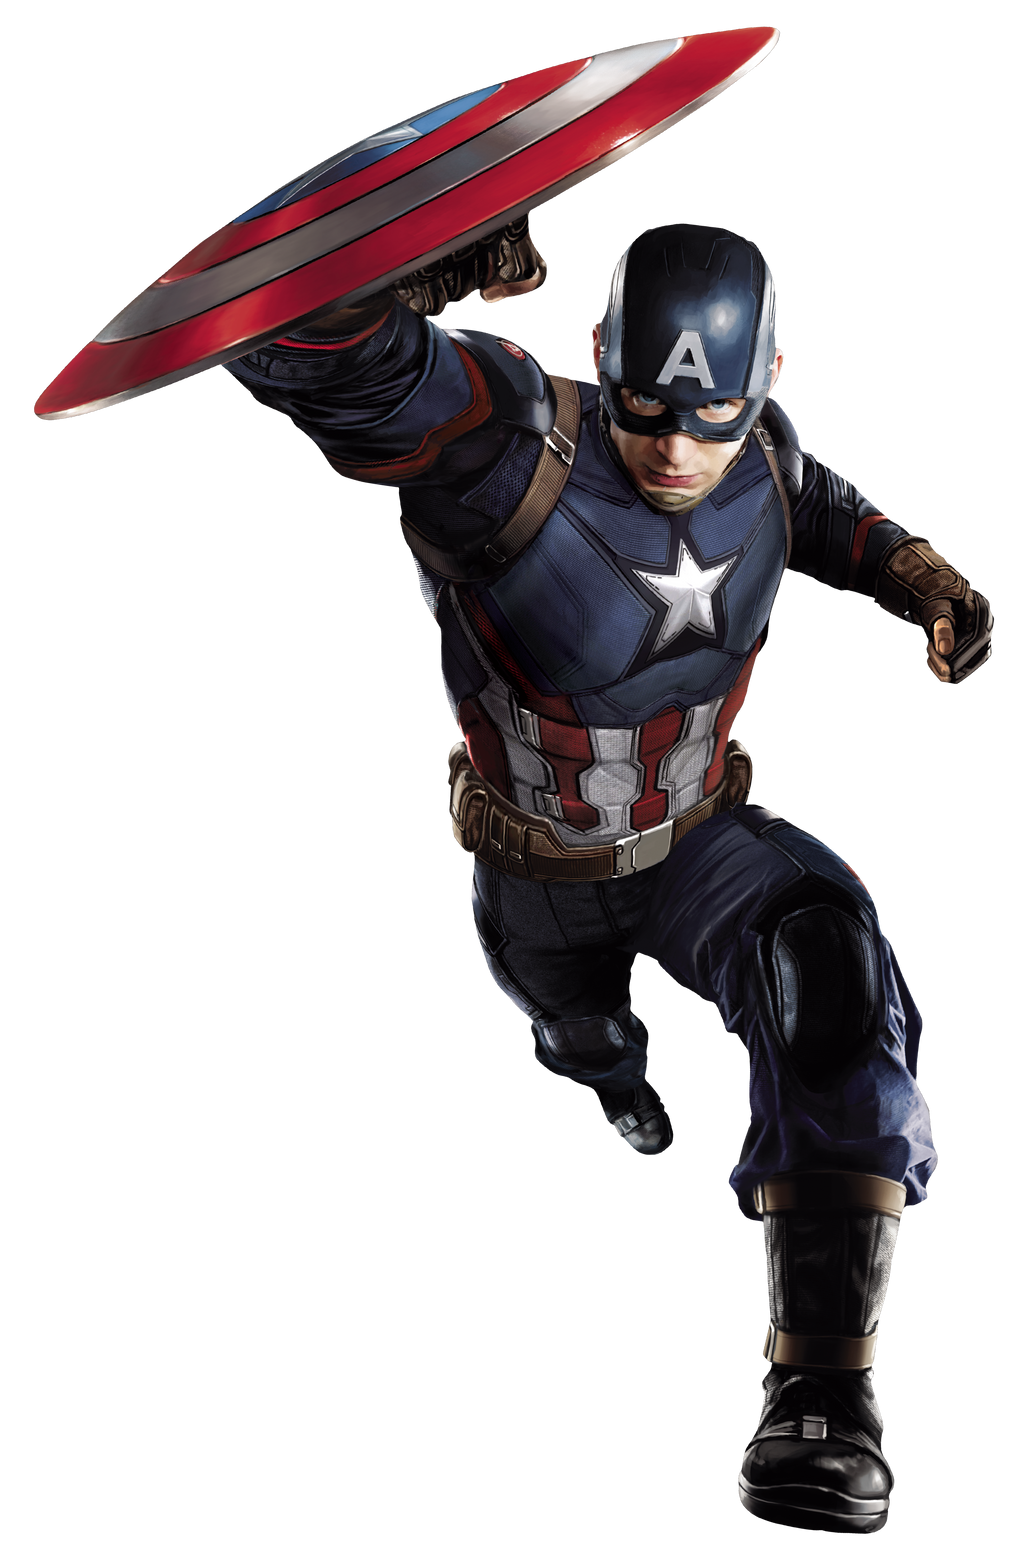 Captain America Comic Super Hero USA Flag Costume Boomerang Shield Metal Sign